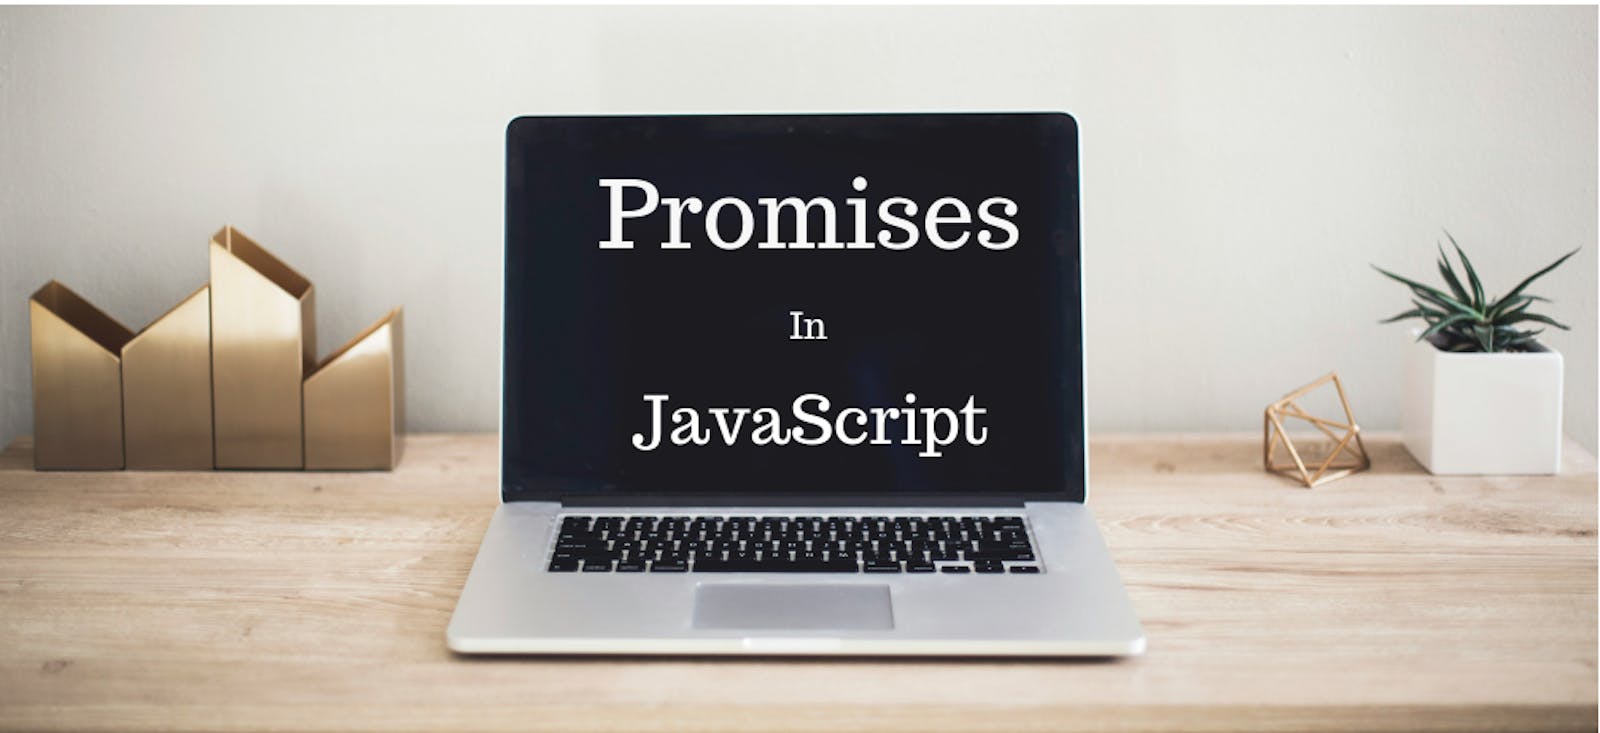 What's Promises in JavaScript?